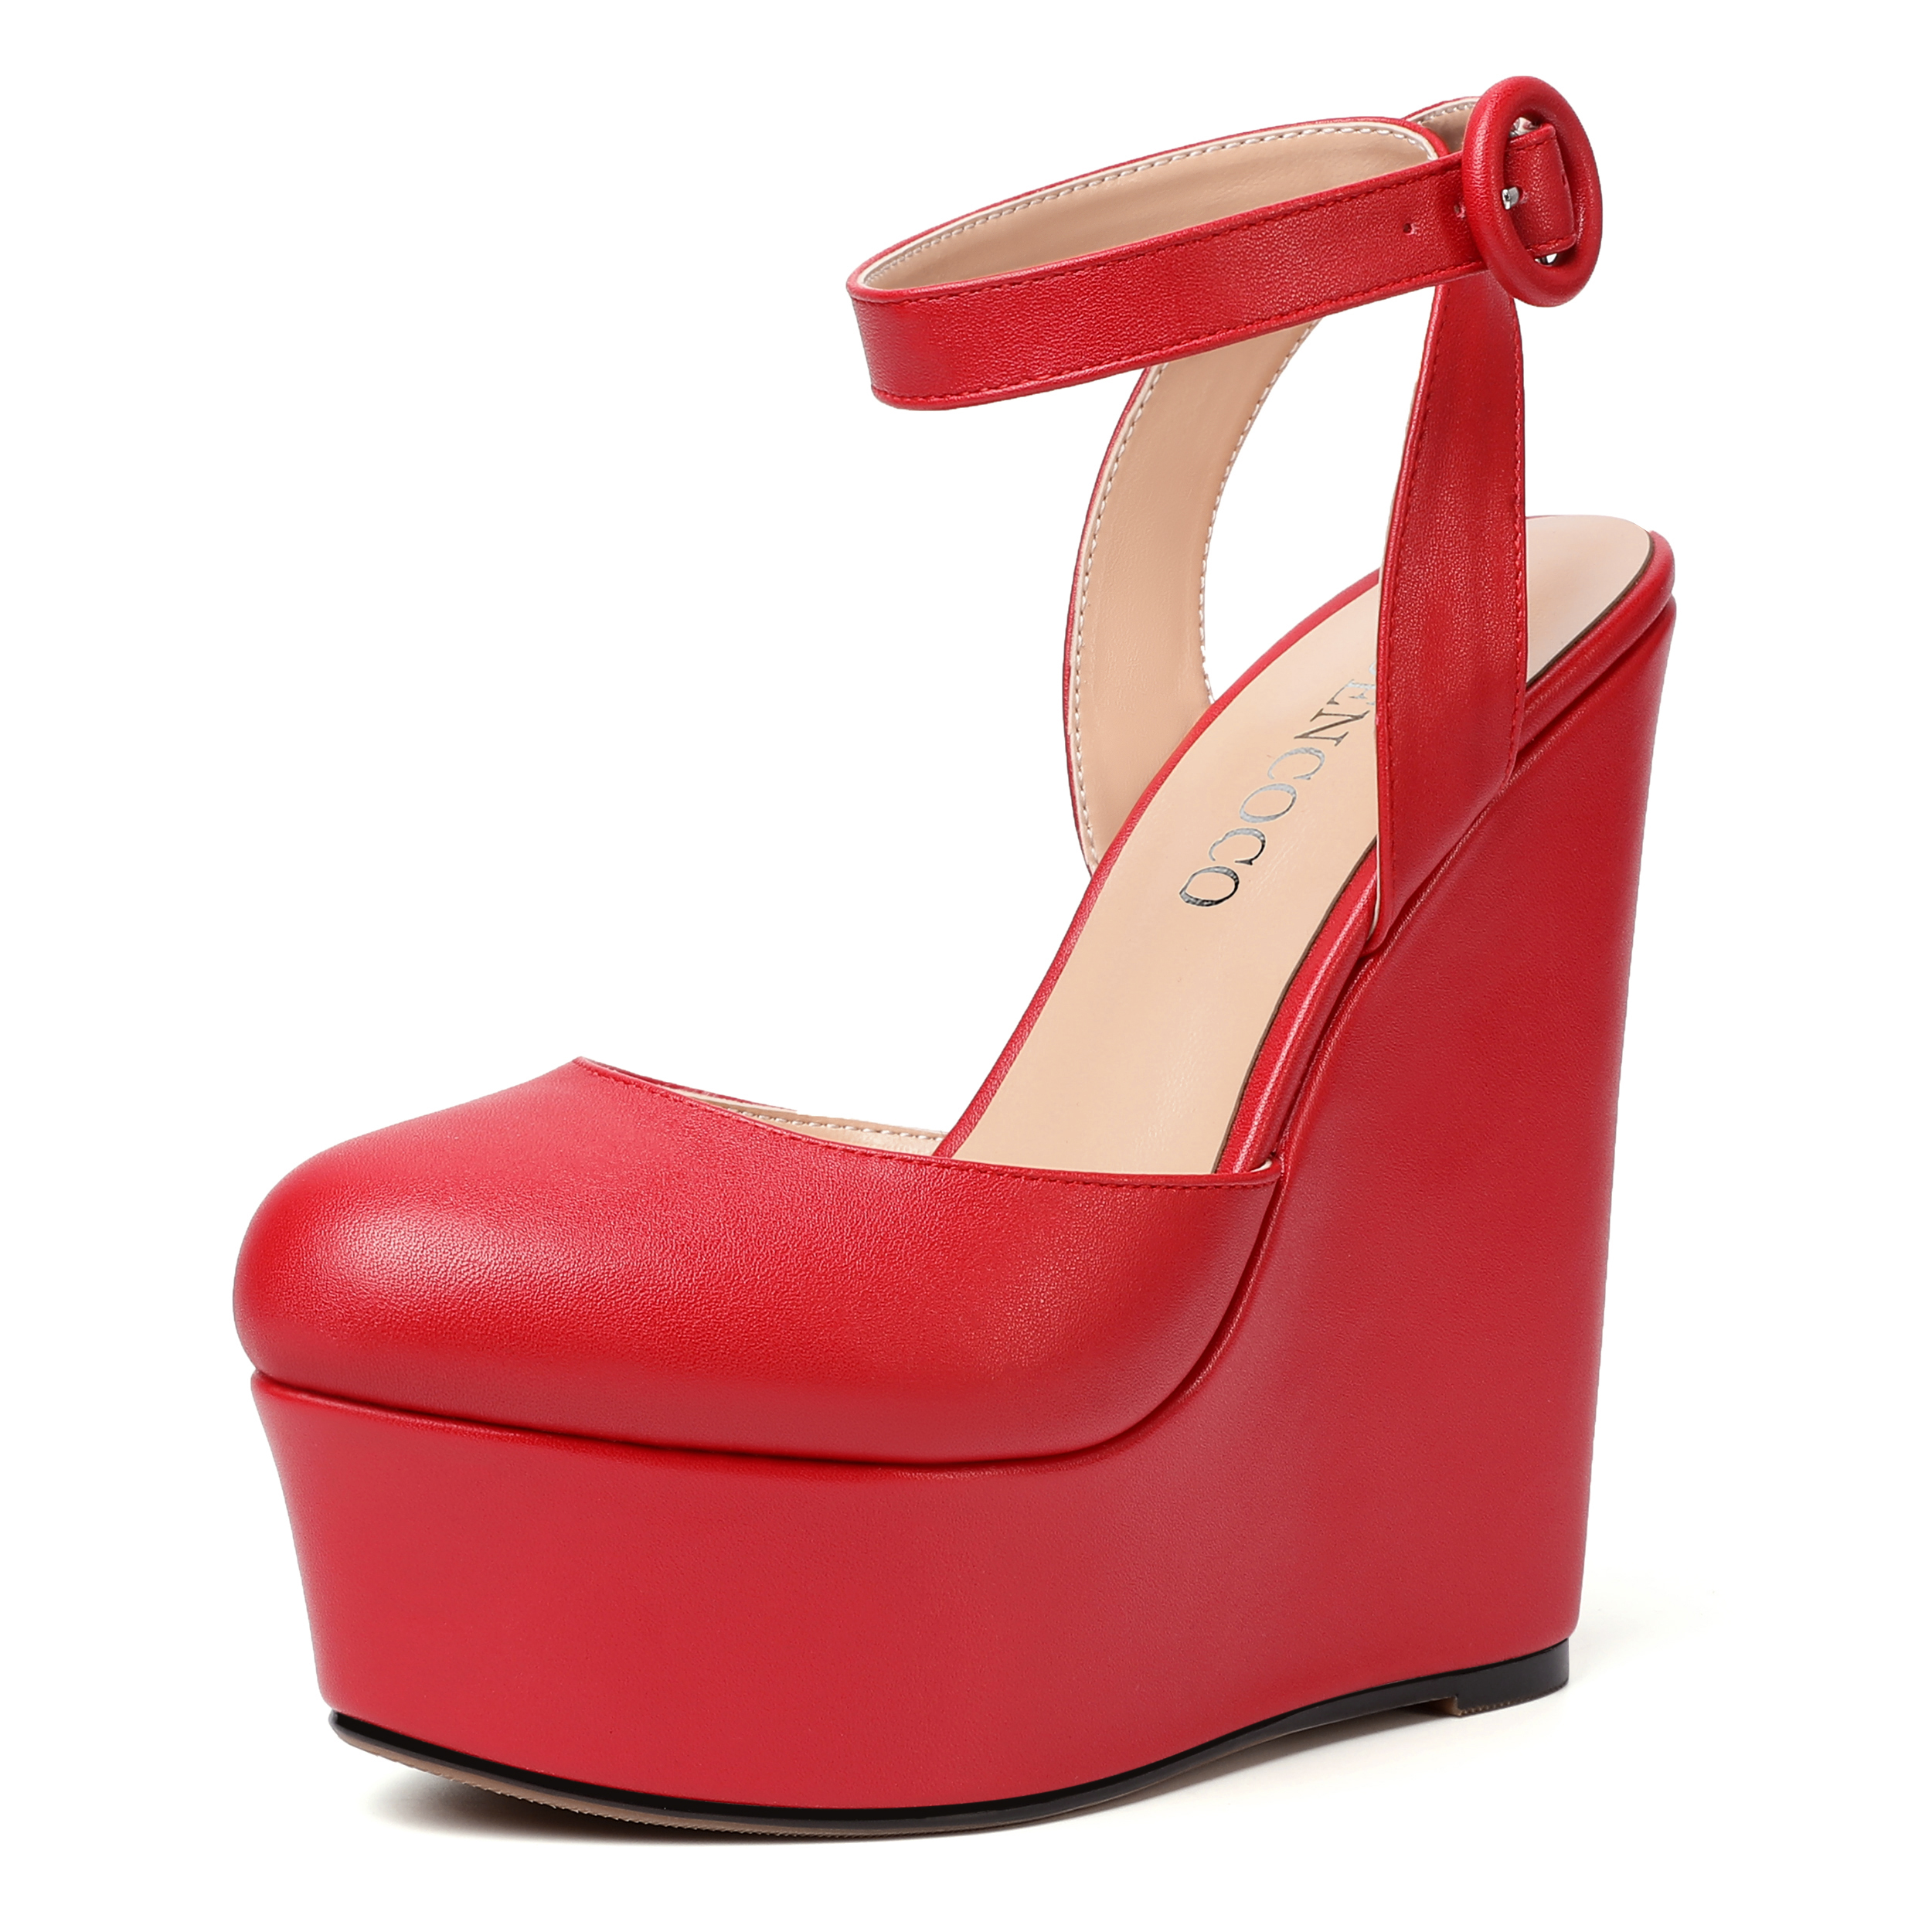 YODEKS Women's Wedge Heel Pumps,Platform High Heel Wedge Pump Shoes,Ankle  Strap Round Toe Red Dress Heels